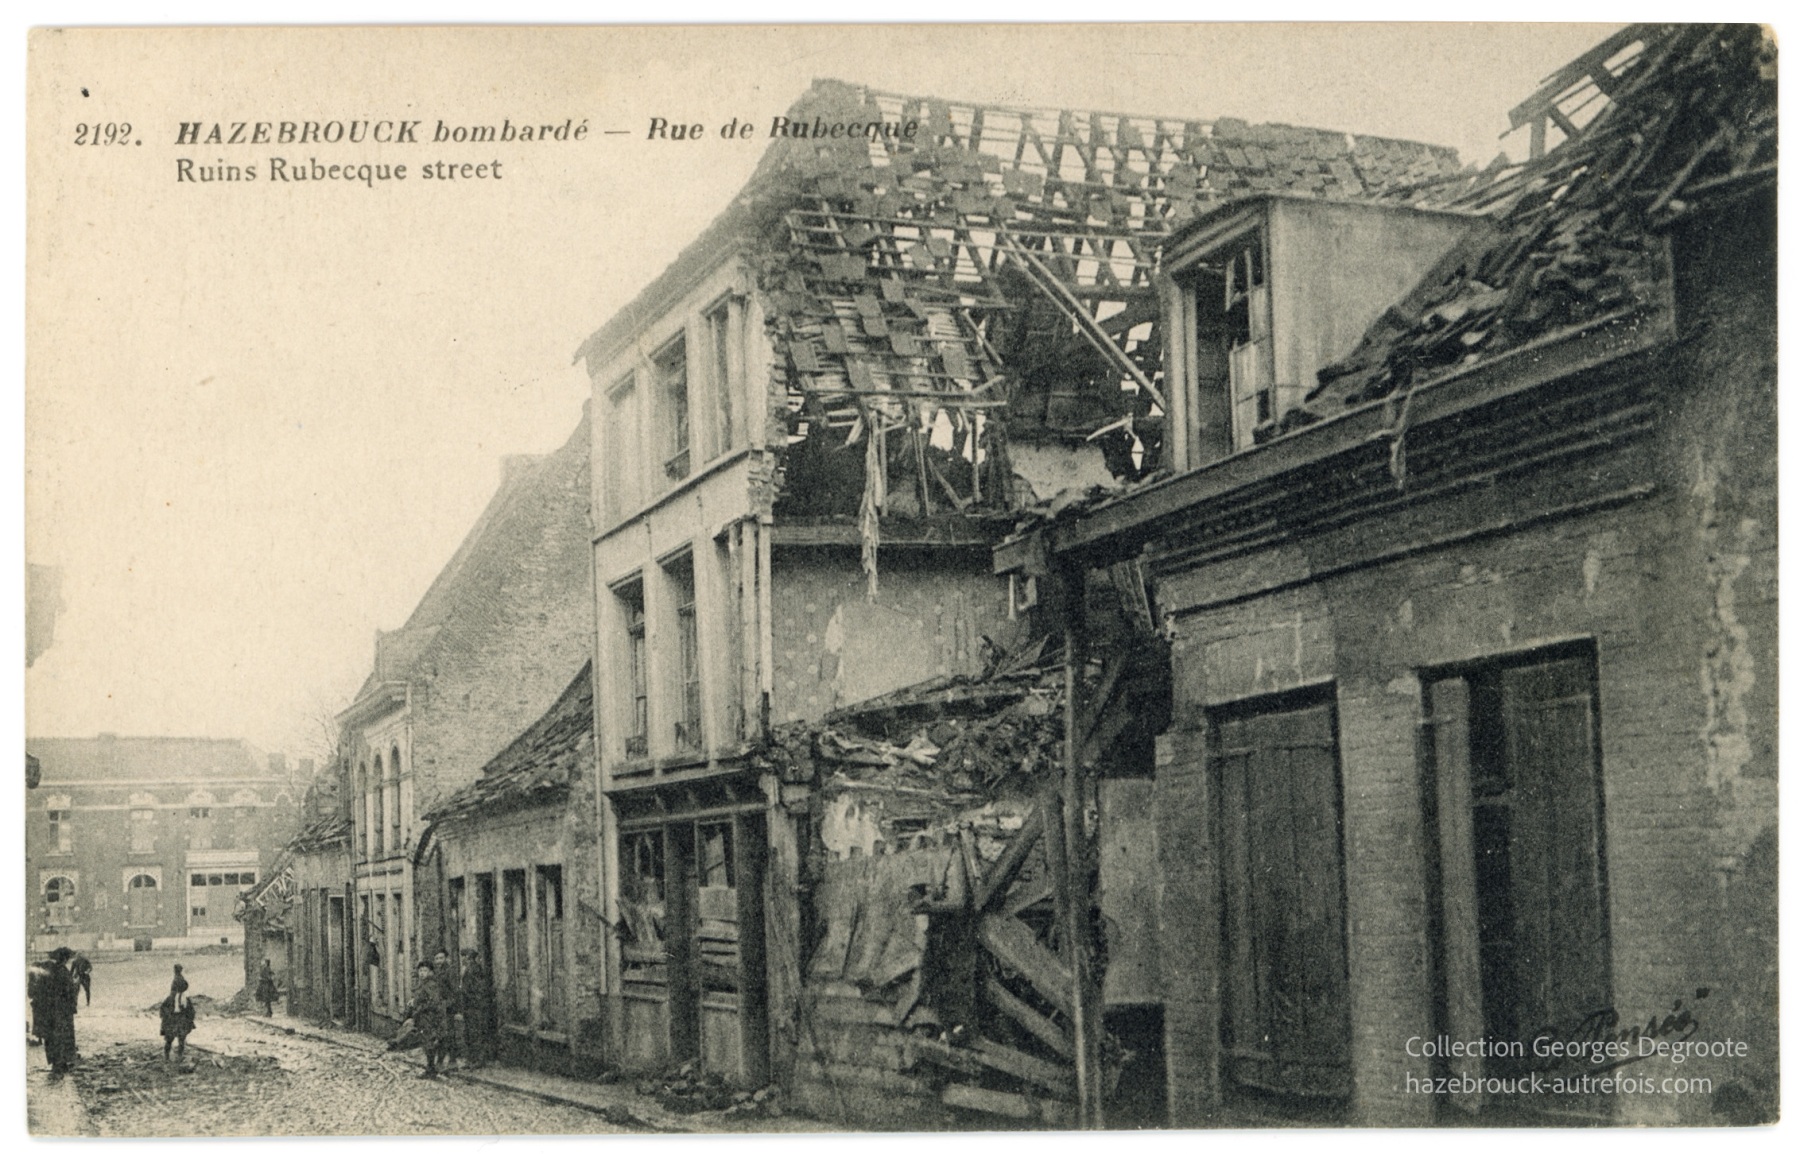 Hazebrouck bombardé - Rue de Rubecque